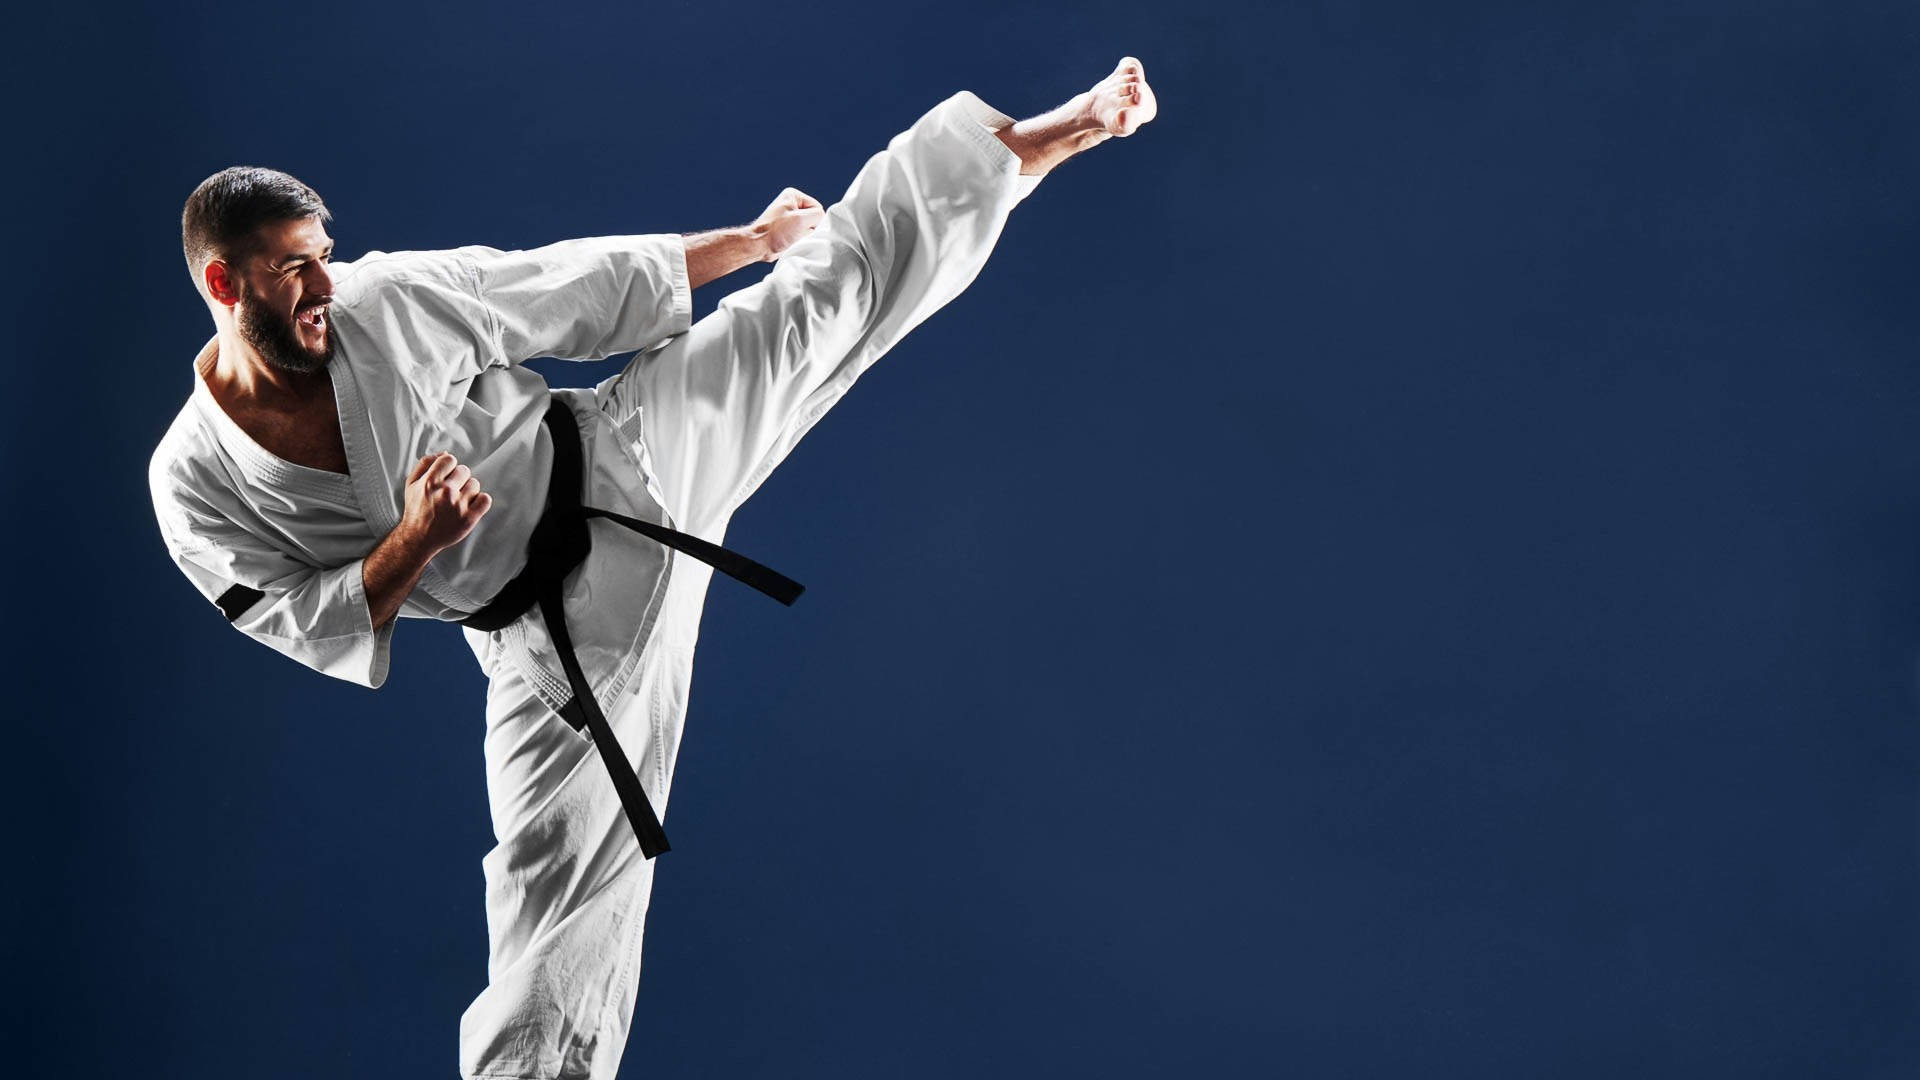 Sportivodi Taekwondo Con Cintura Nera E Alto Calcio Sfondo